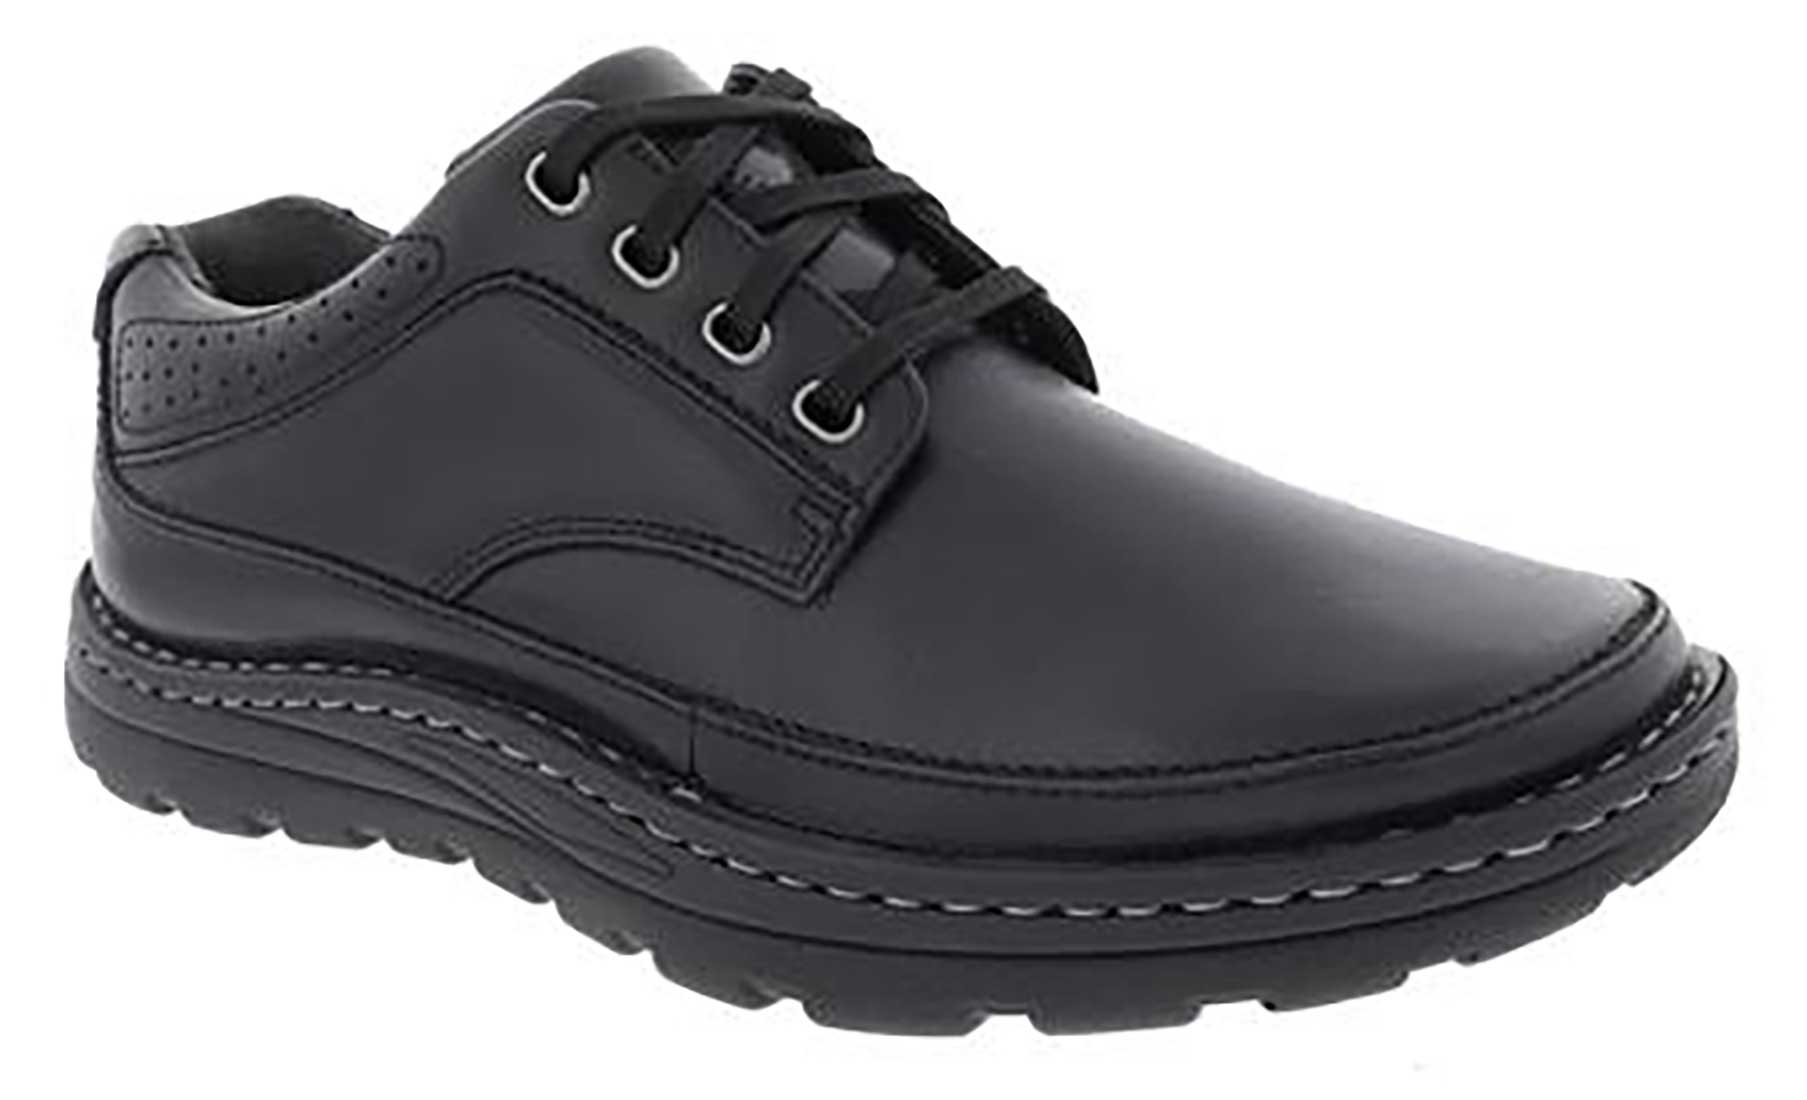 Drew Shoes Toledo II 40200 - Men's Casual Comfort Therapeutic Diabetic Shoe - Extra Depth For Orthotics